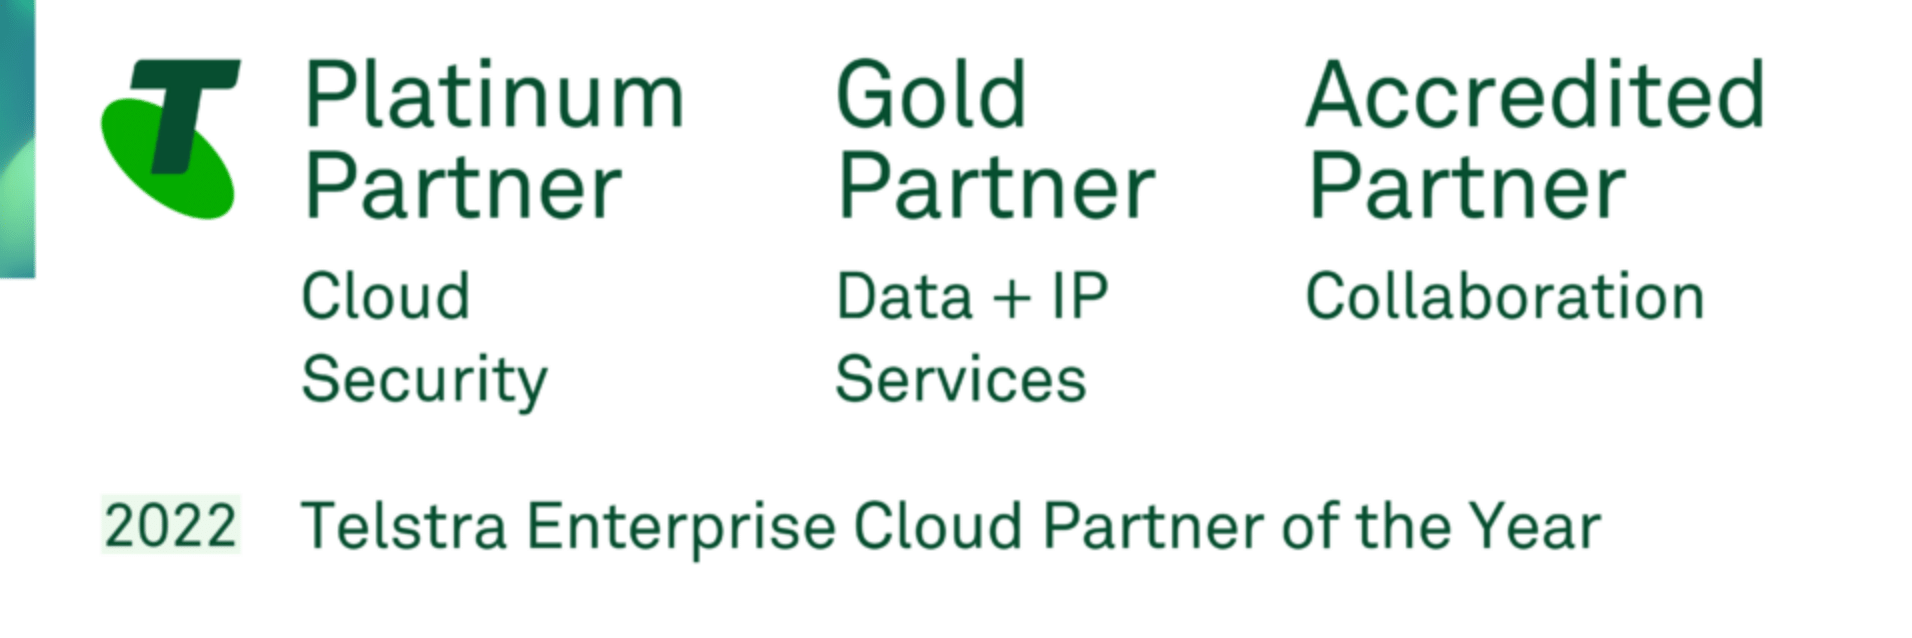 Telstra Enterprise Cloud Partner of the Year